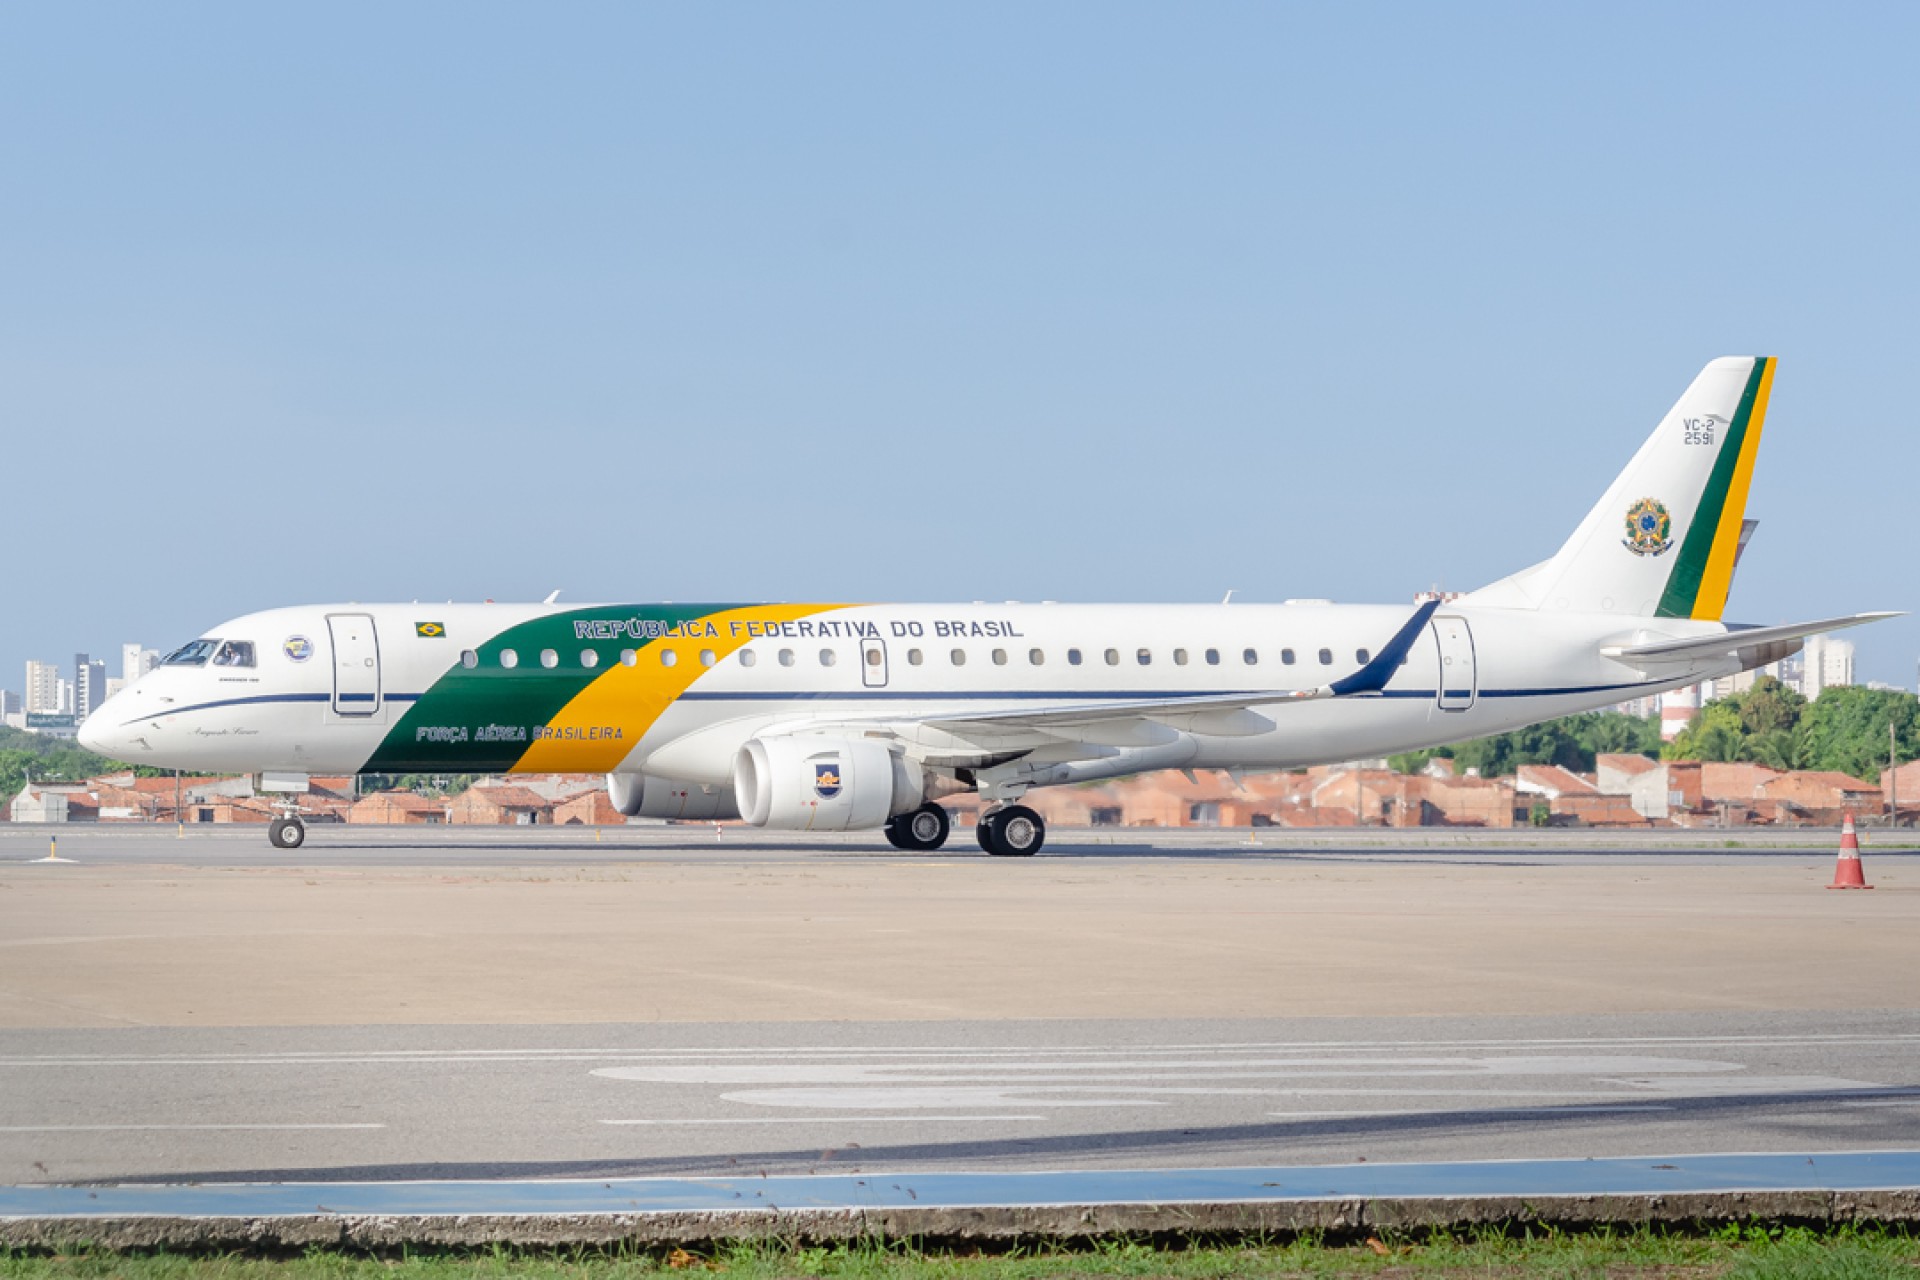 Fortaleza em 23 de fevereiro de 2020, Aviao do palacio do planalto, chega no aeroporto de Fortaleza. (Foto @GlauberMCosta / Especial para O Povo) (Foto: GlauberMCosta / Especial para O POVO)